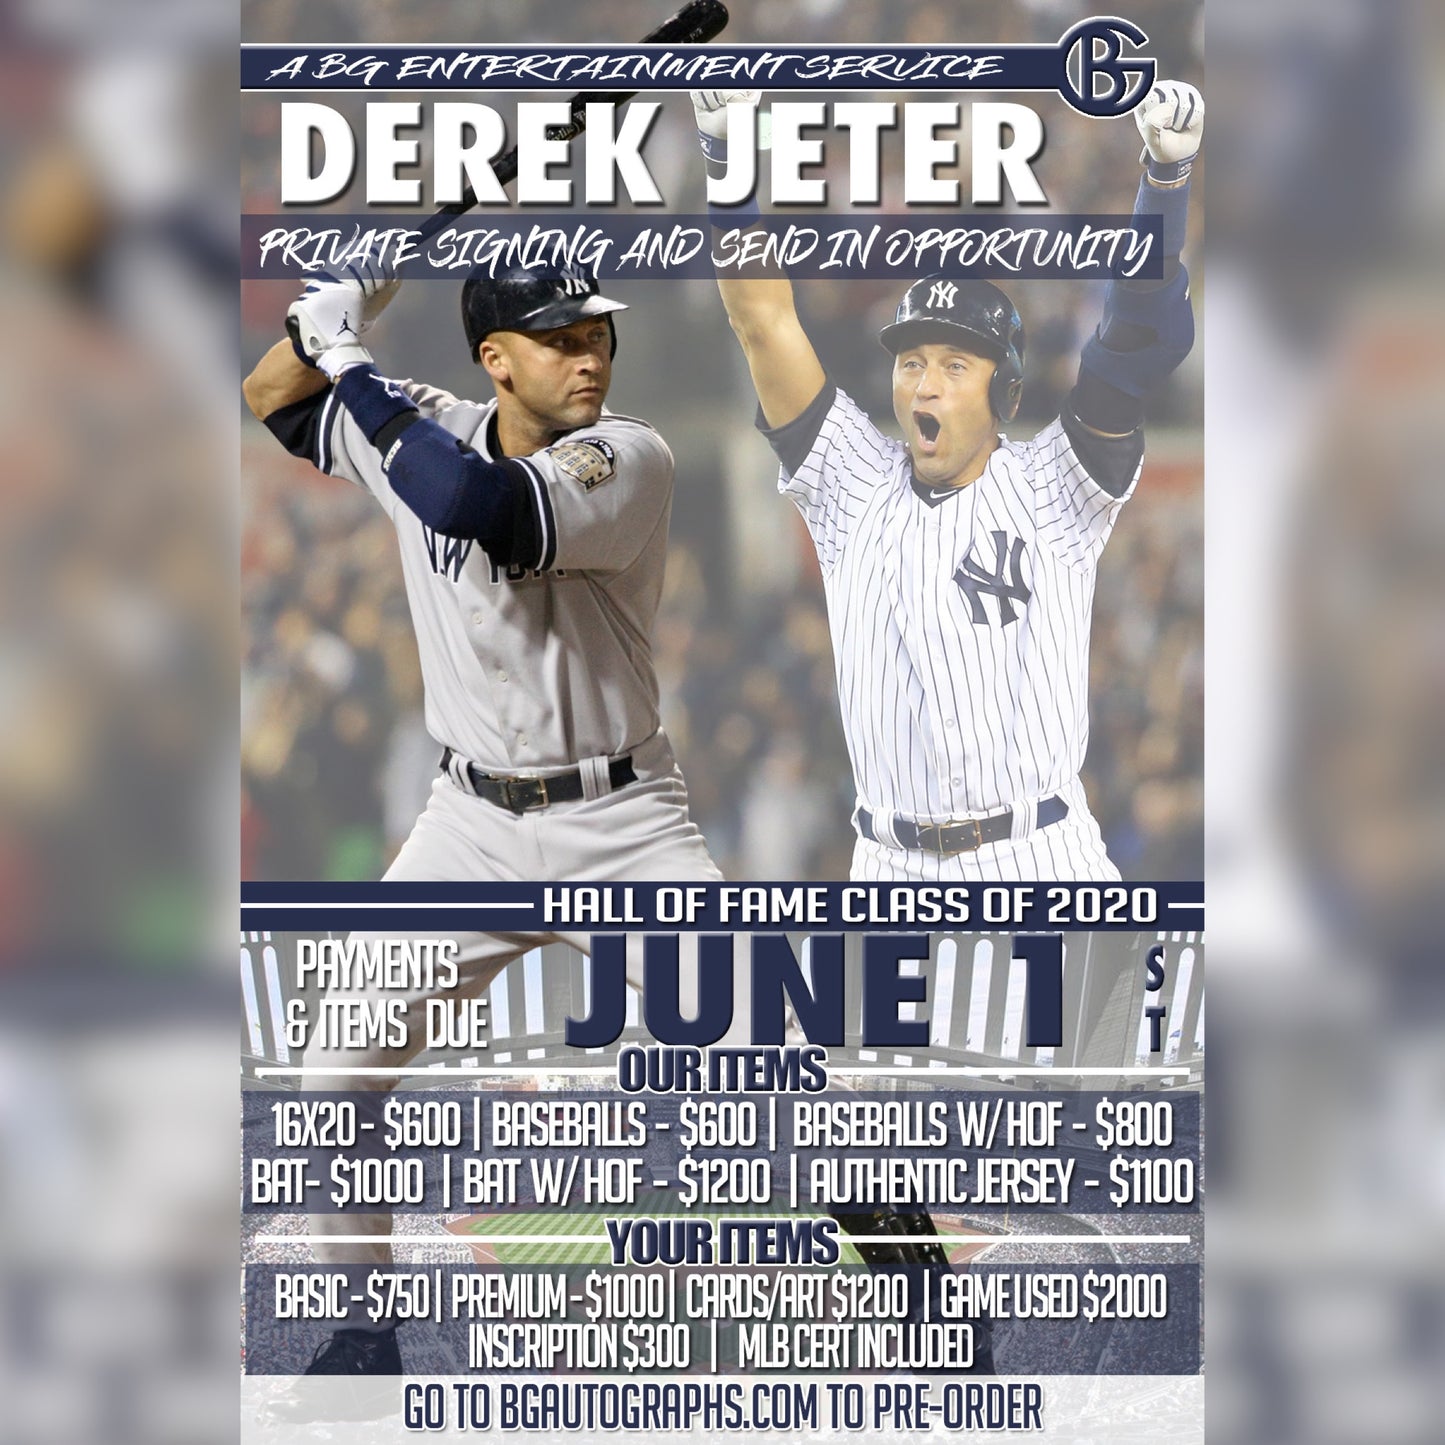 Derek Jeter Private Autograph Signing - June 1st